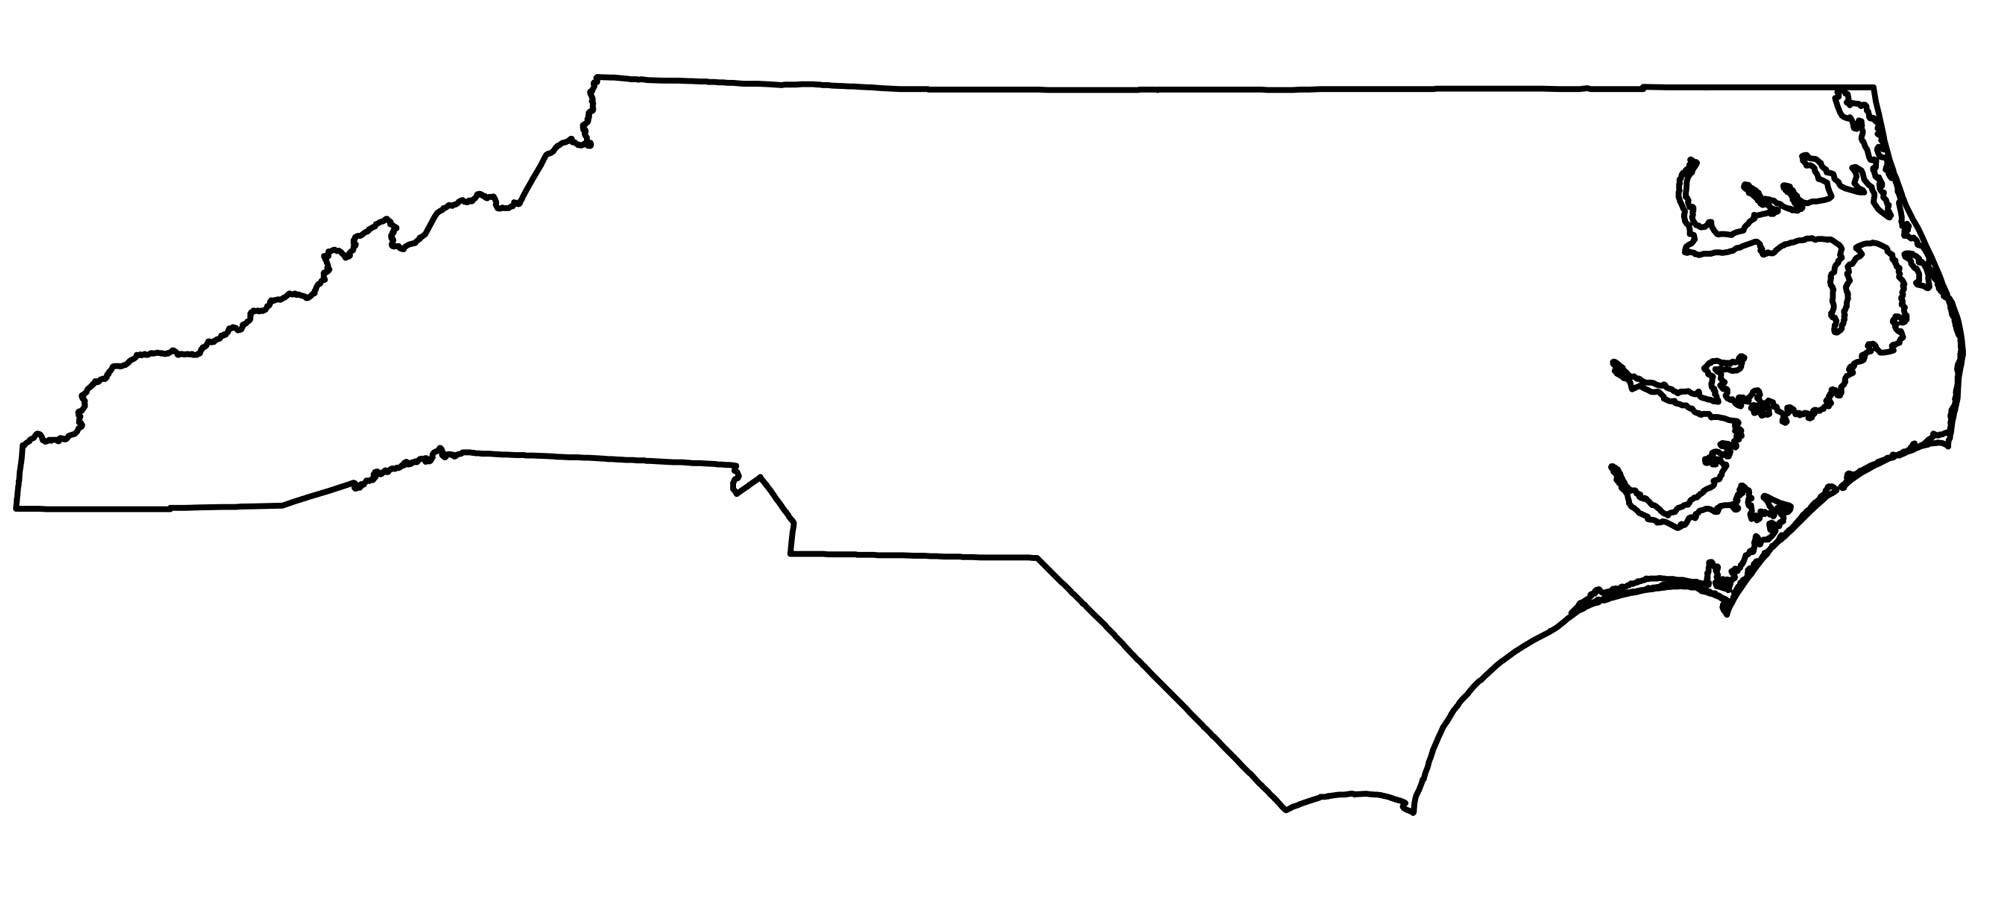 North-Carolina-Outline-Map.jpg